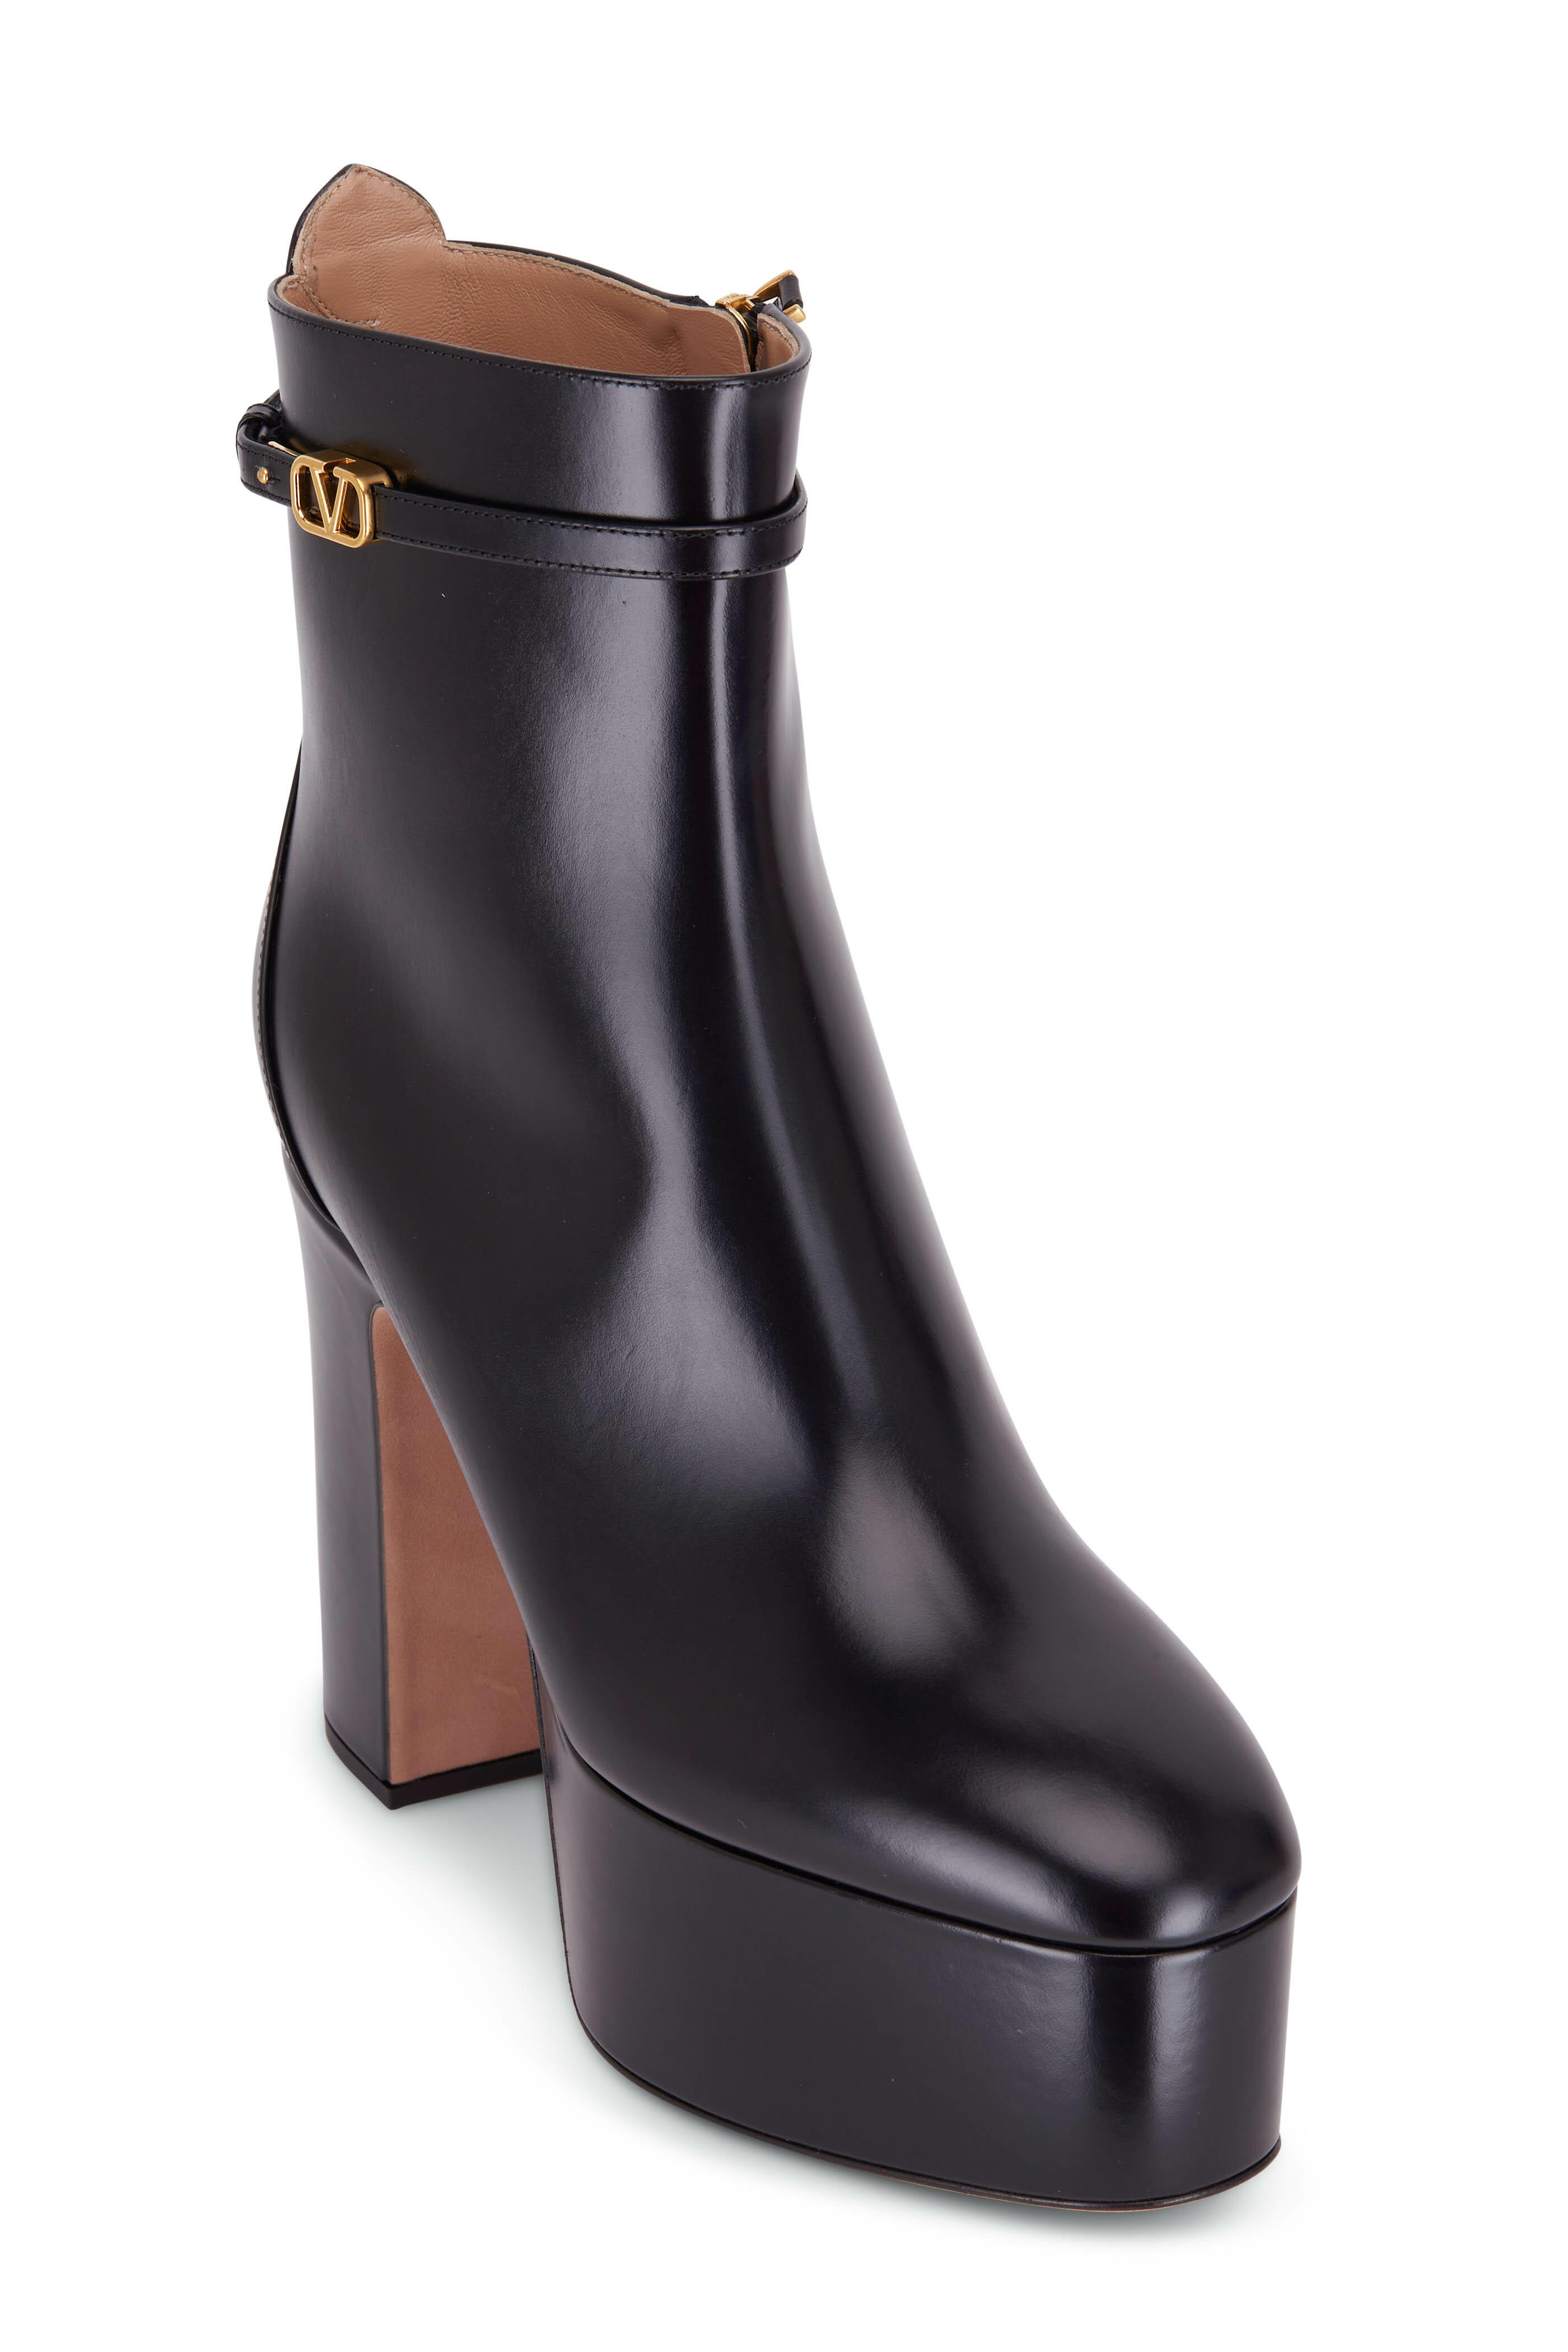 Cordelia Evalueerbaar Desillusie Valentino Garavani - Tan-Go Black Leather Platform Boot, 120mm